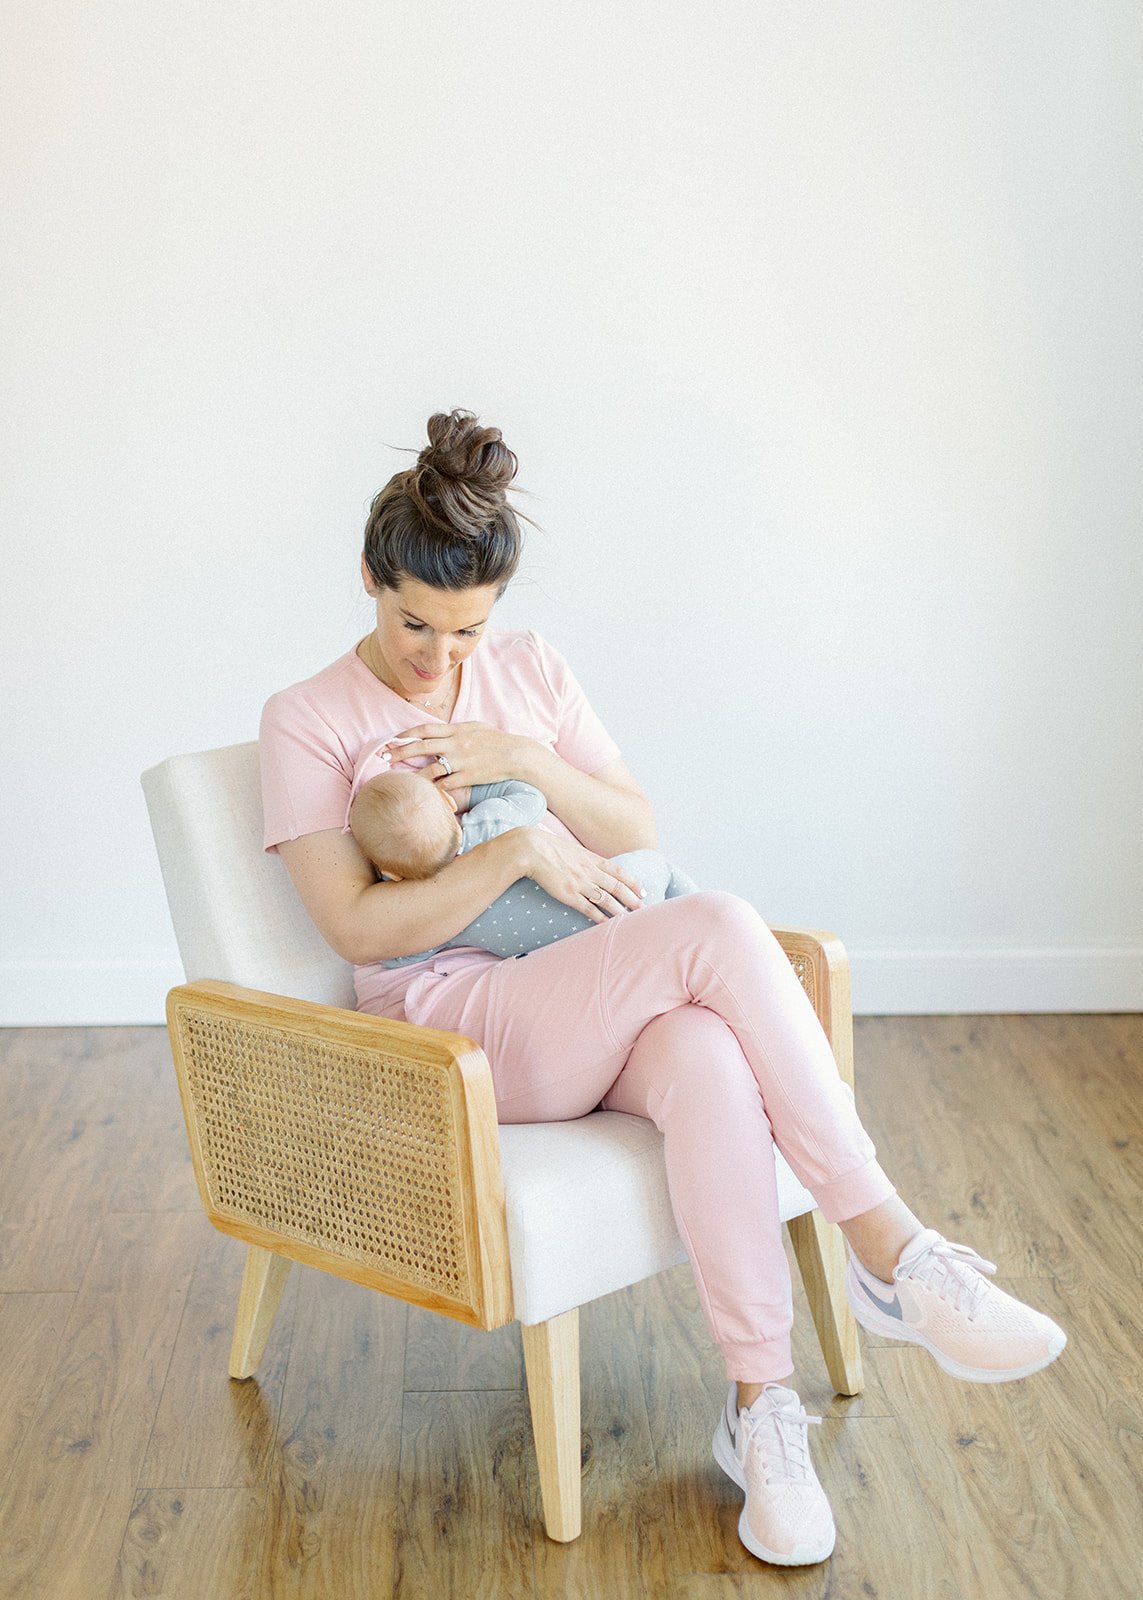 Pooling Breastmilk  Karing for Postpartum